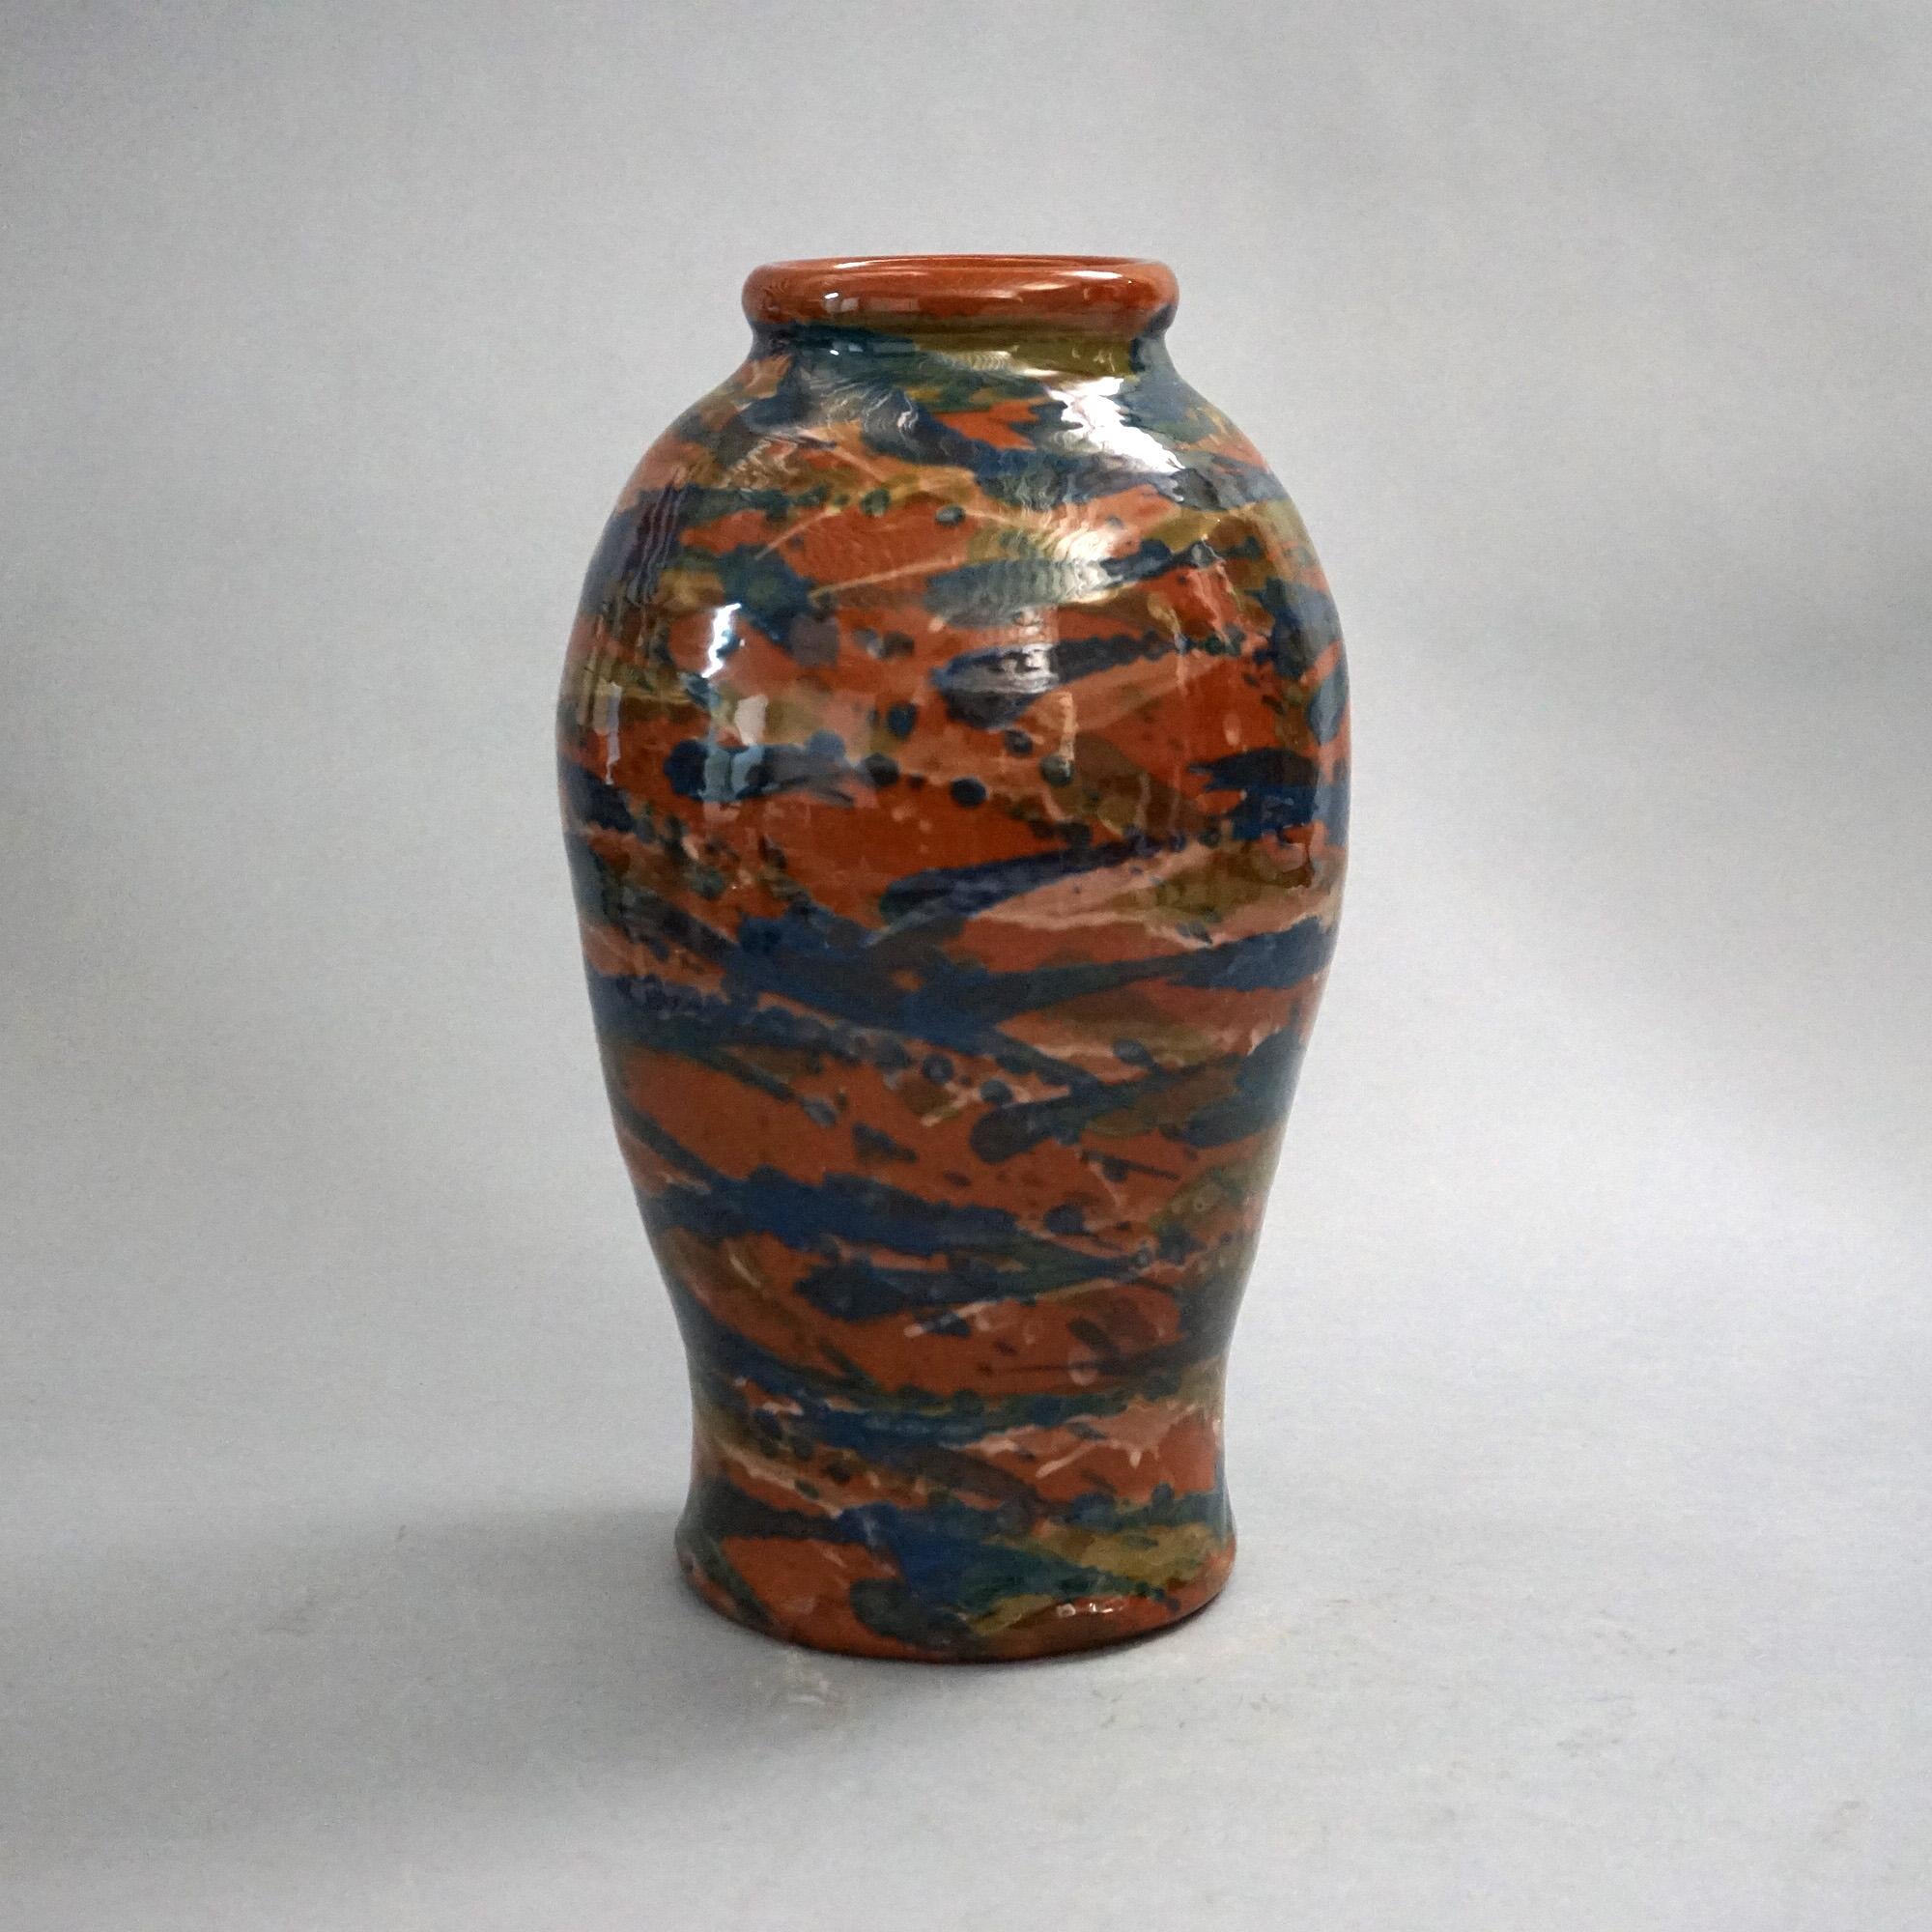 Antique Peters & Reed Multicolor Pottery Floor Vase C1920

Measures - 17